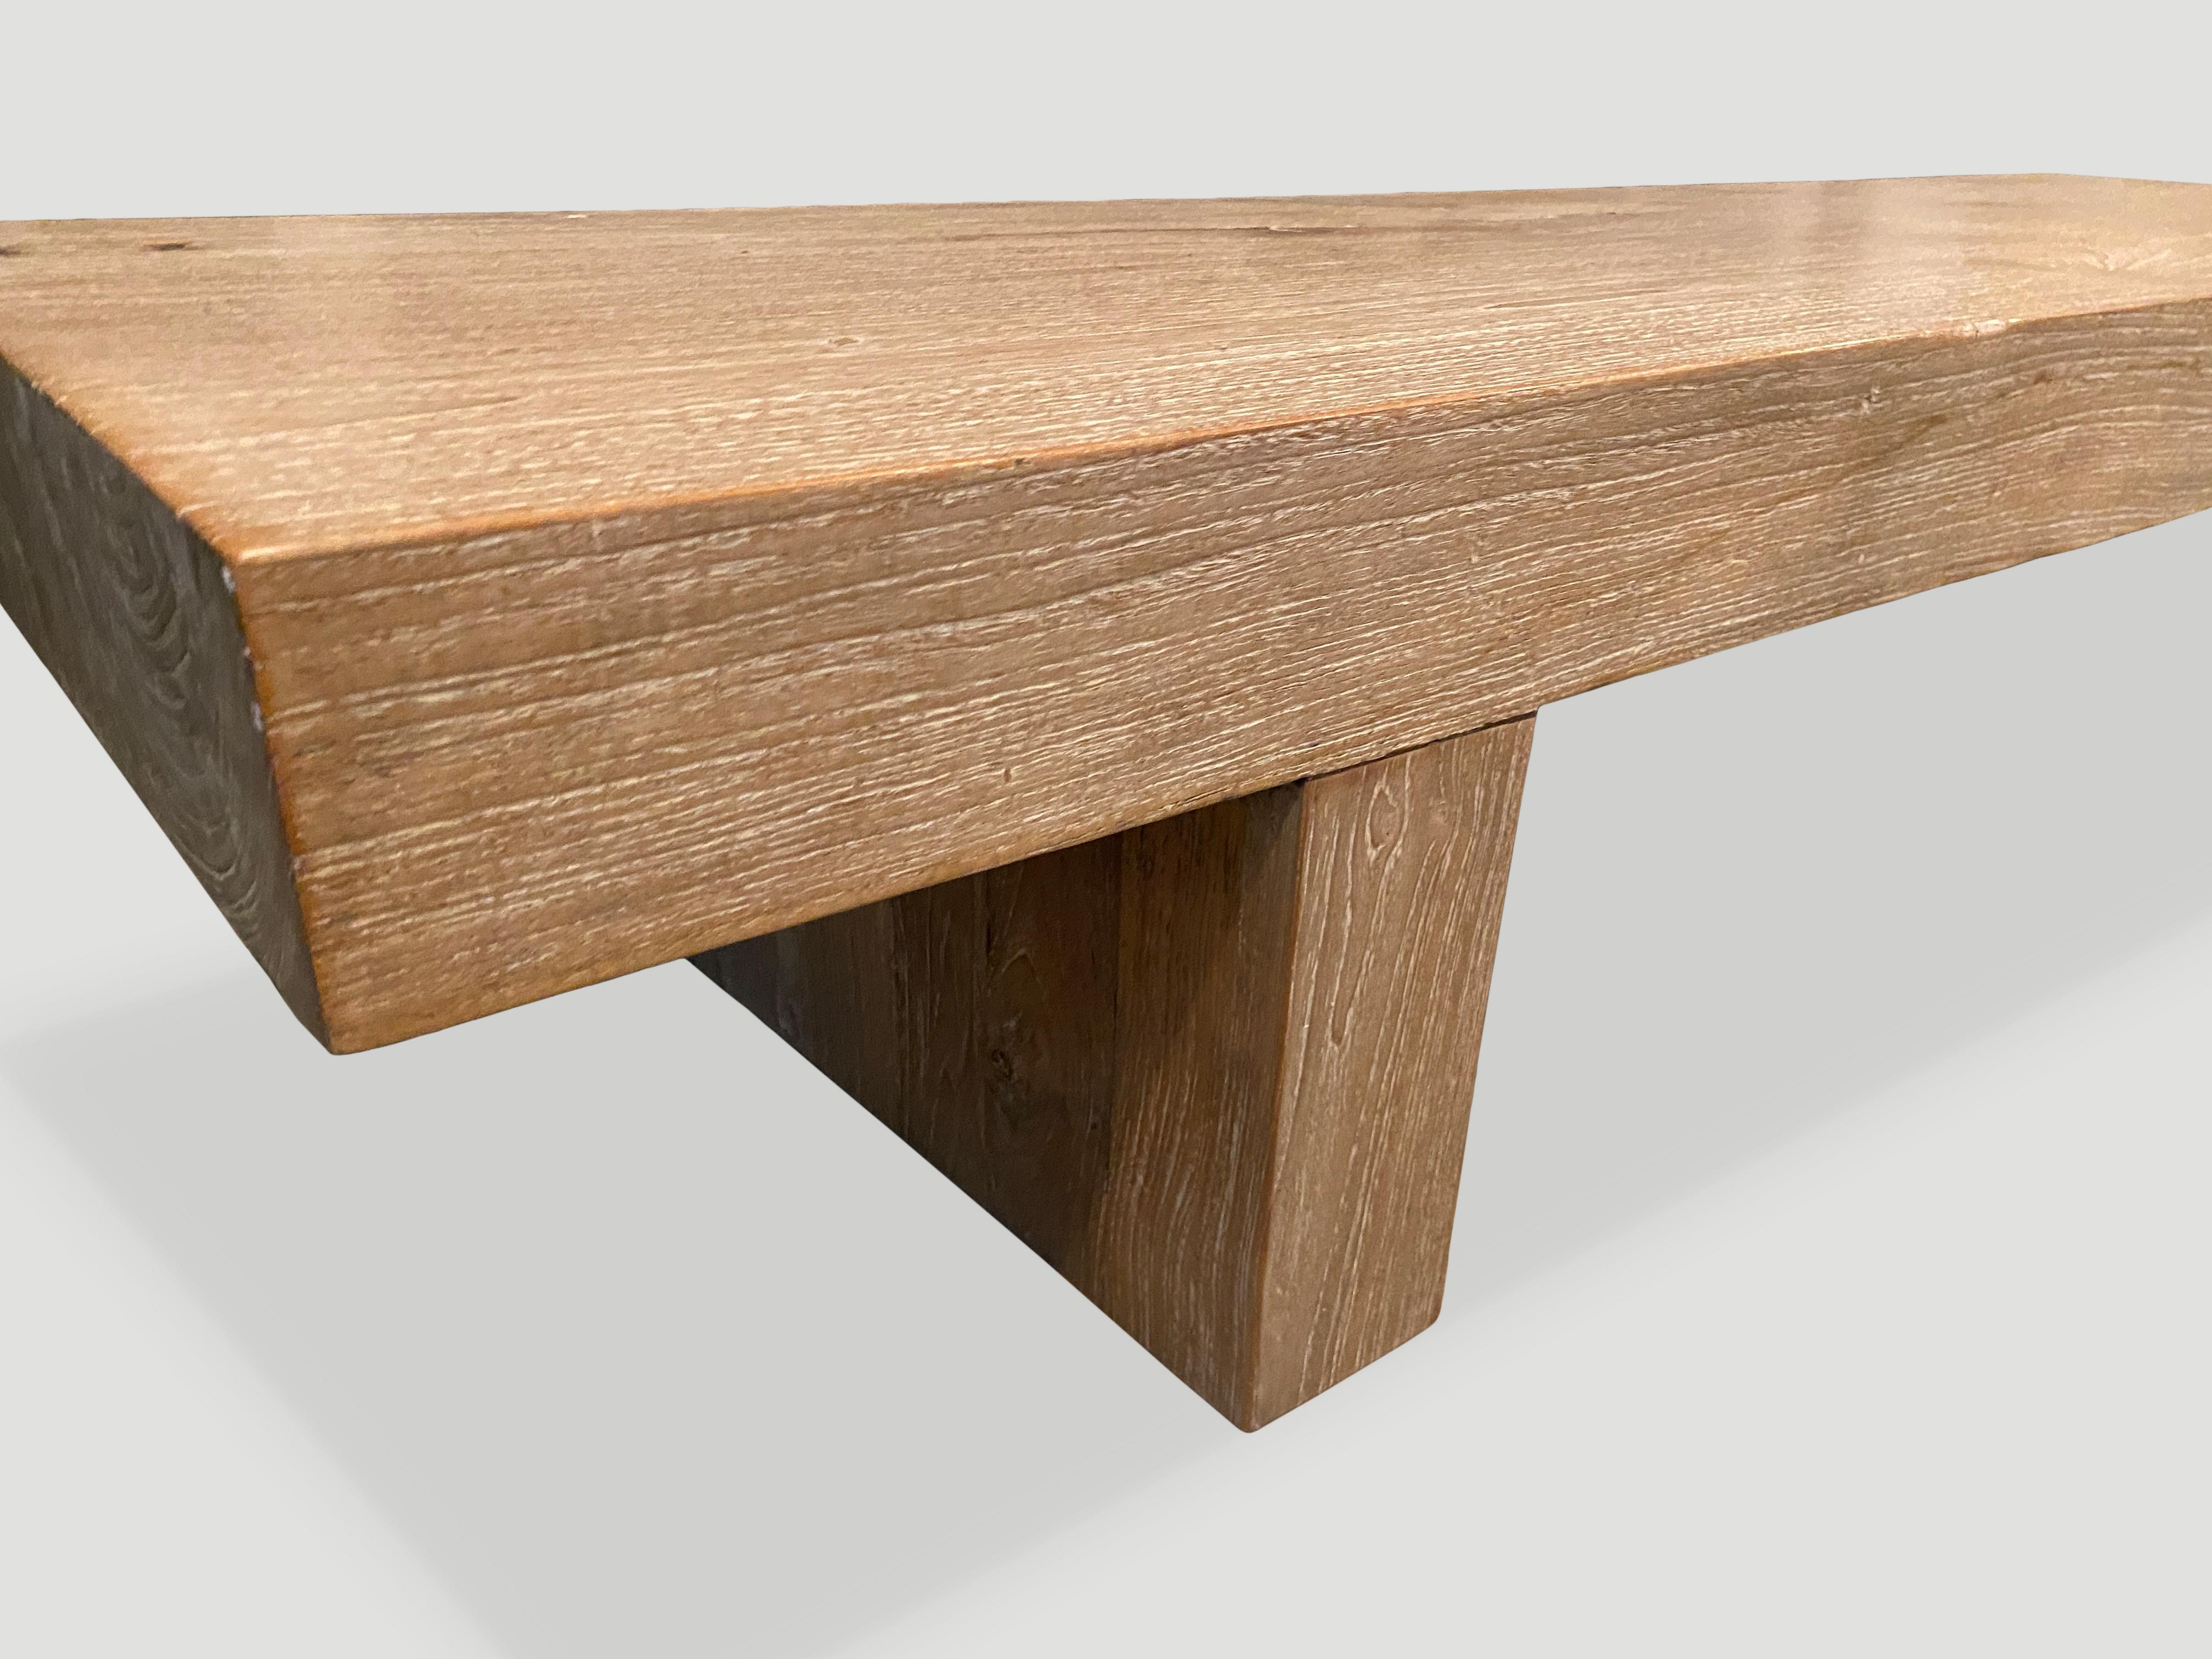 Organic Modern Andrianna Shamaris Impressive Minimalist Teak Wood Coffee Table or Bench For Sale